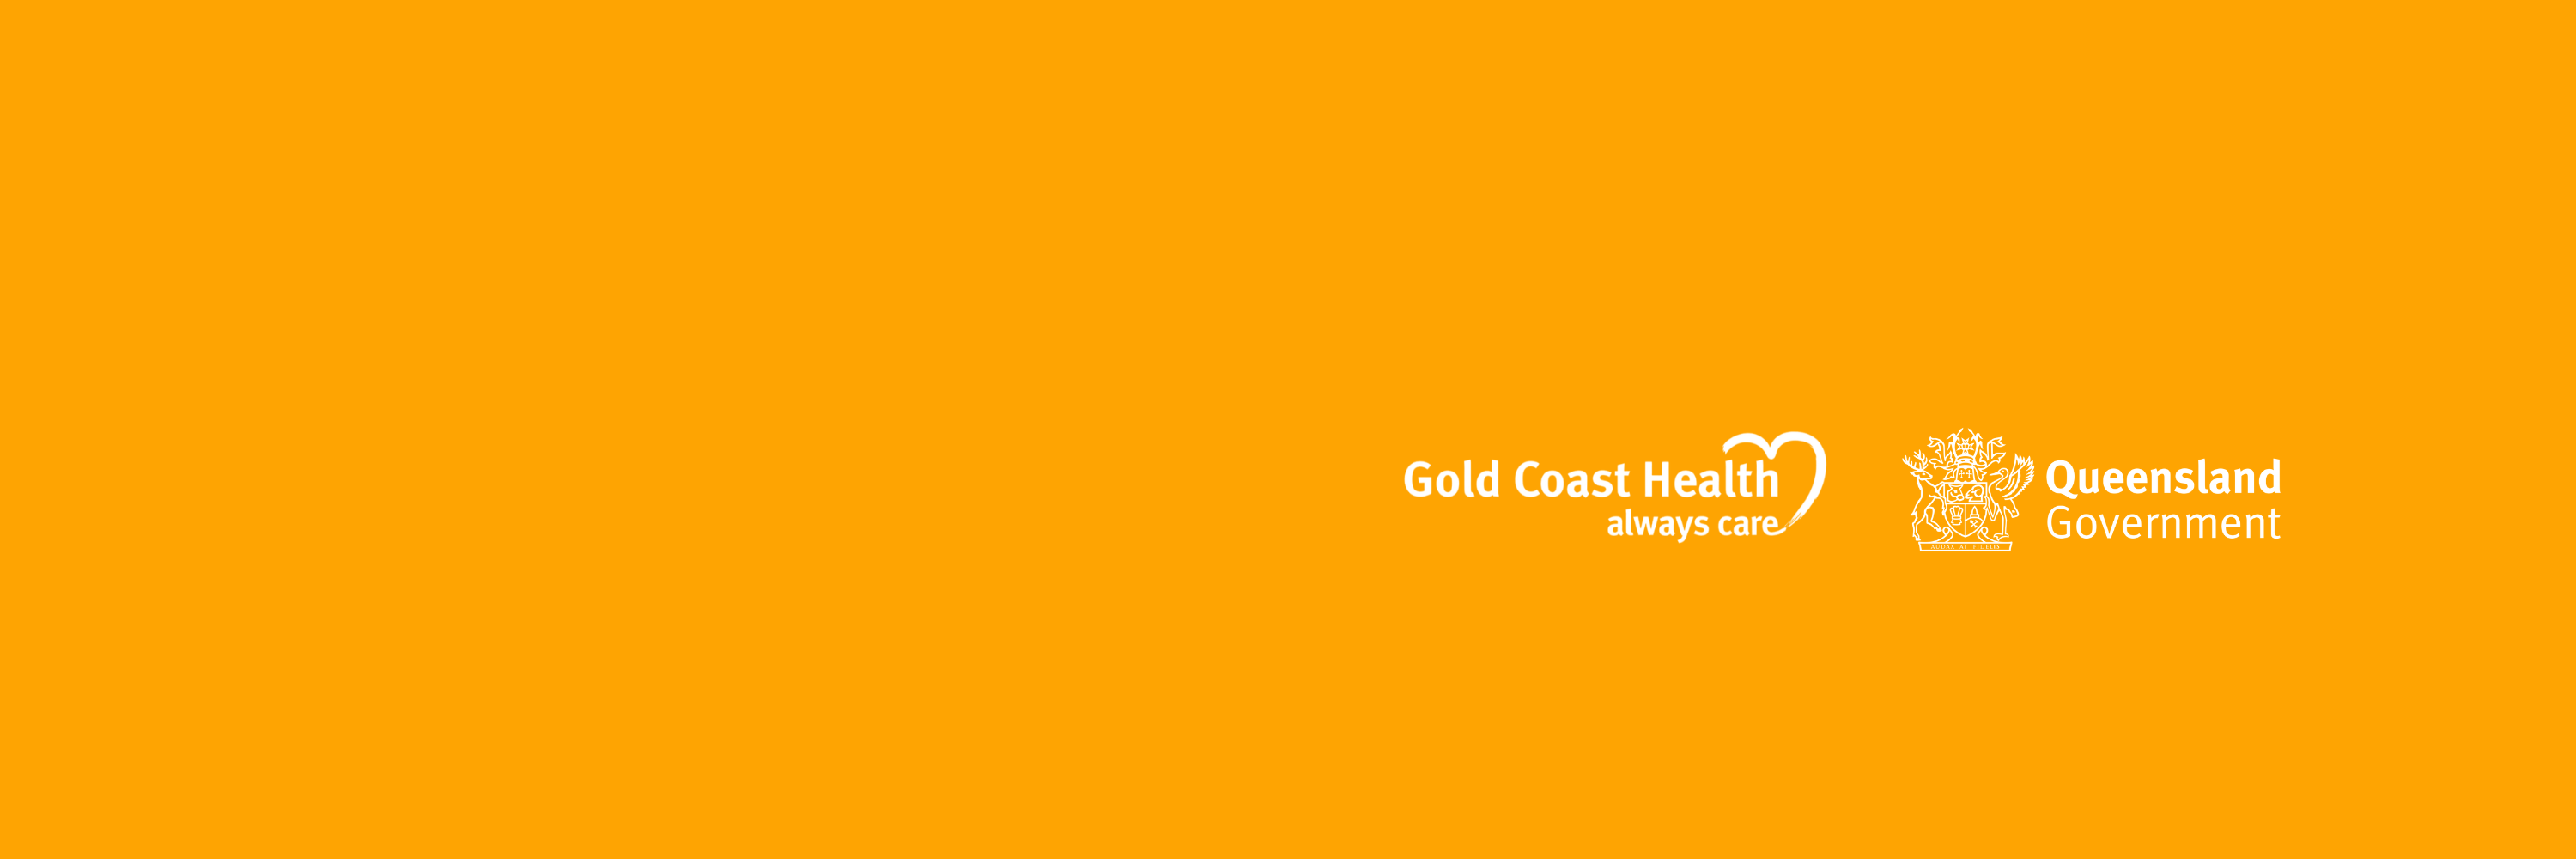 gold coast health logo